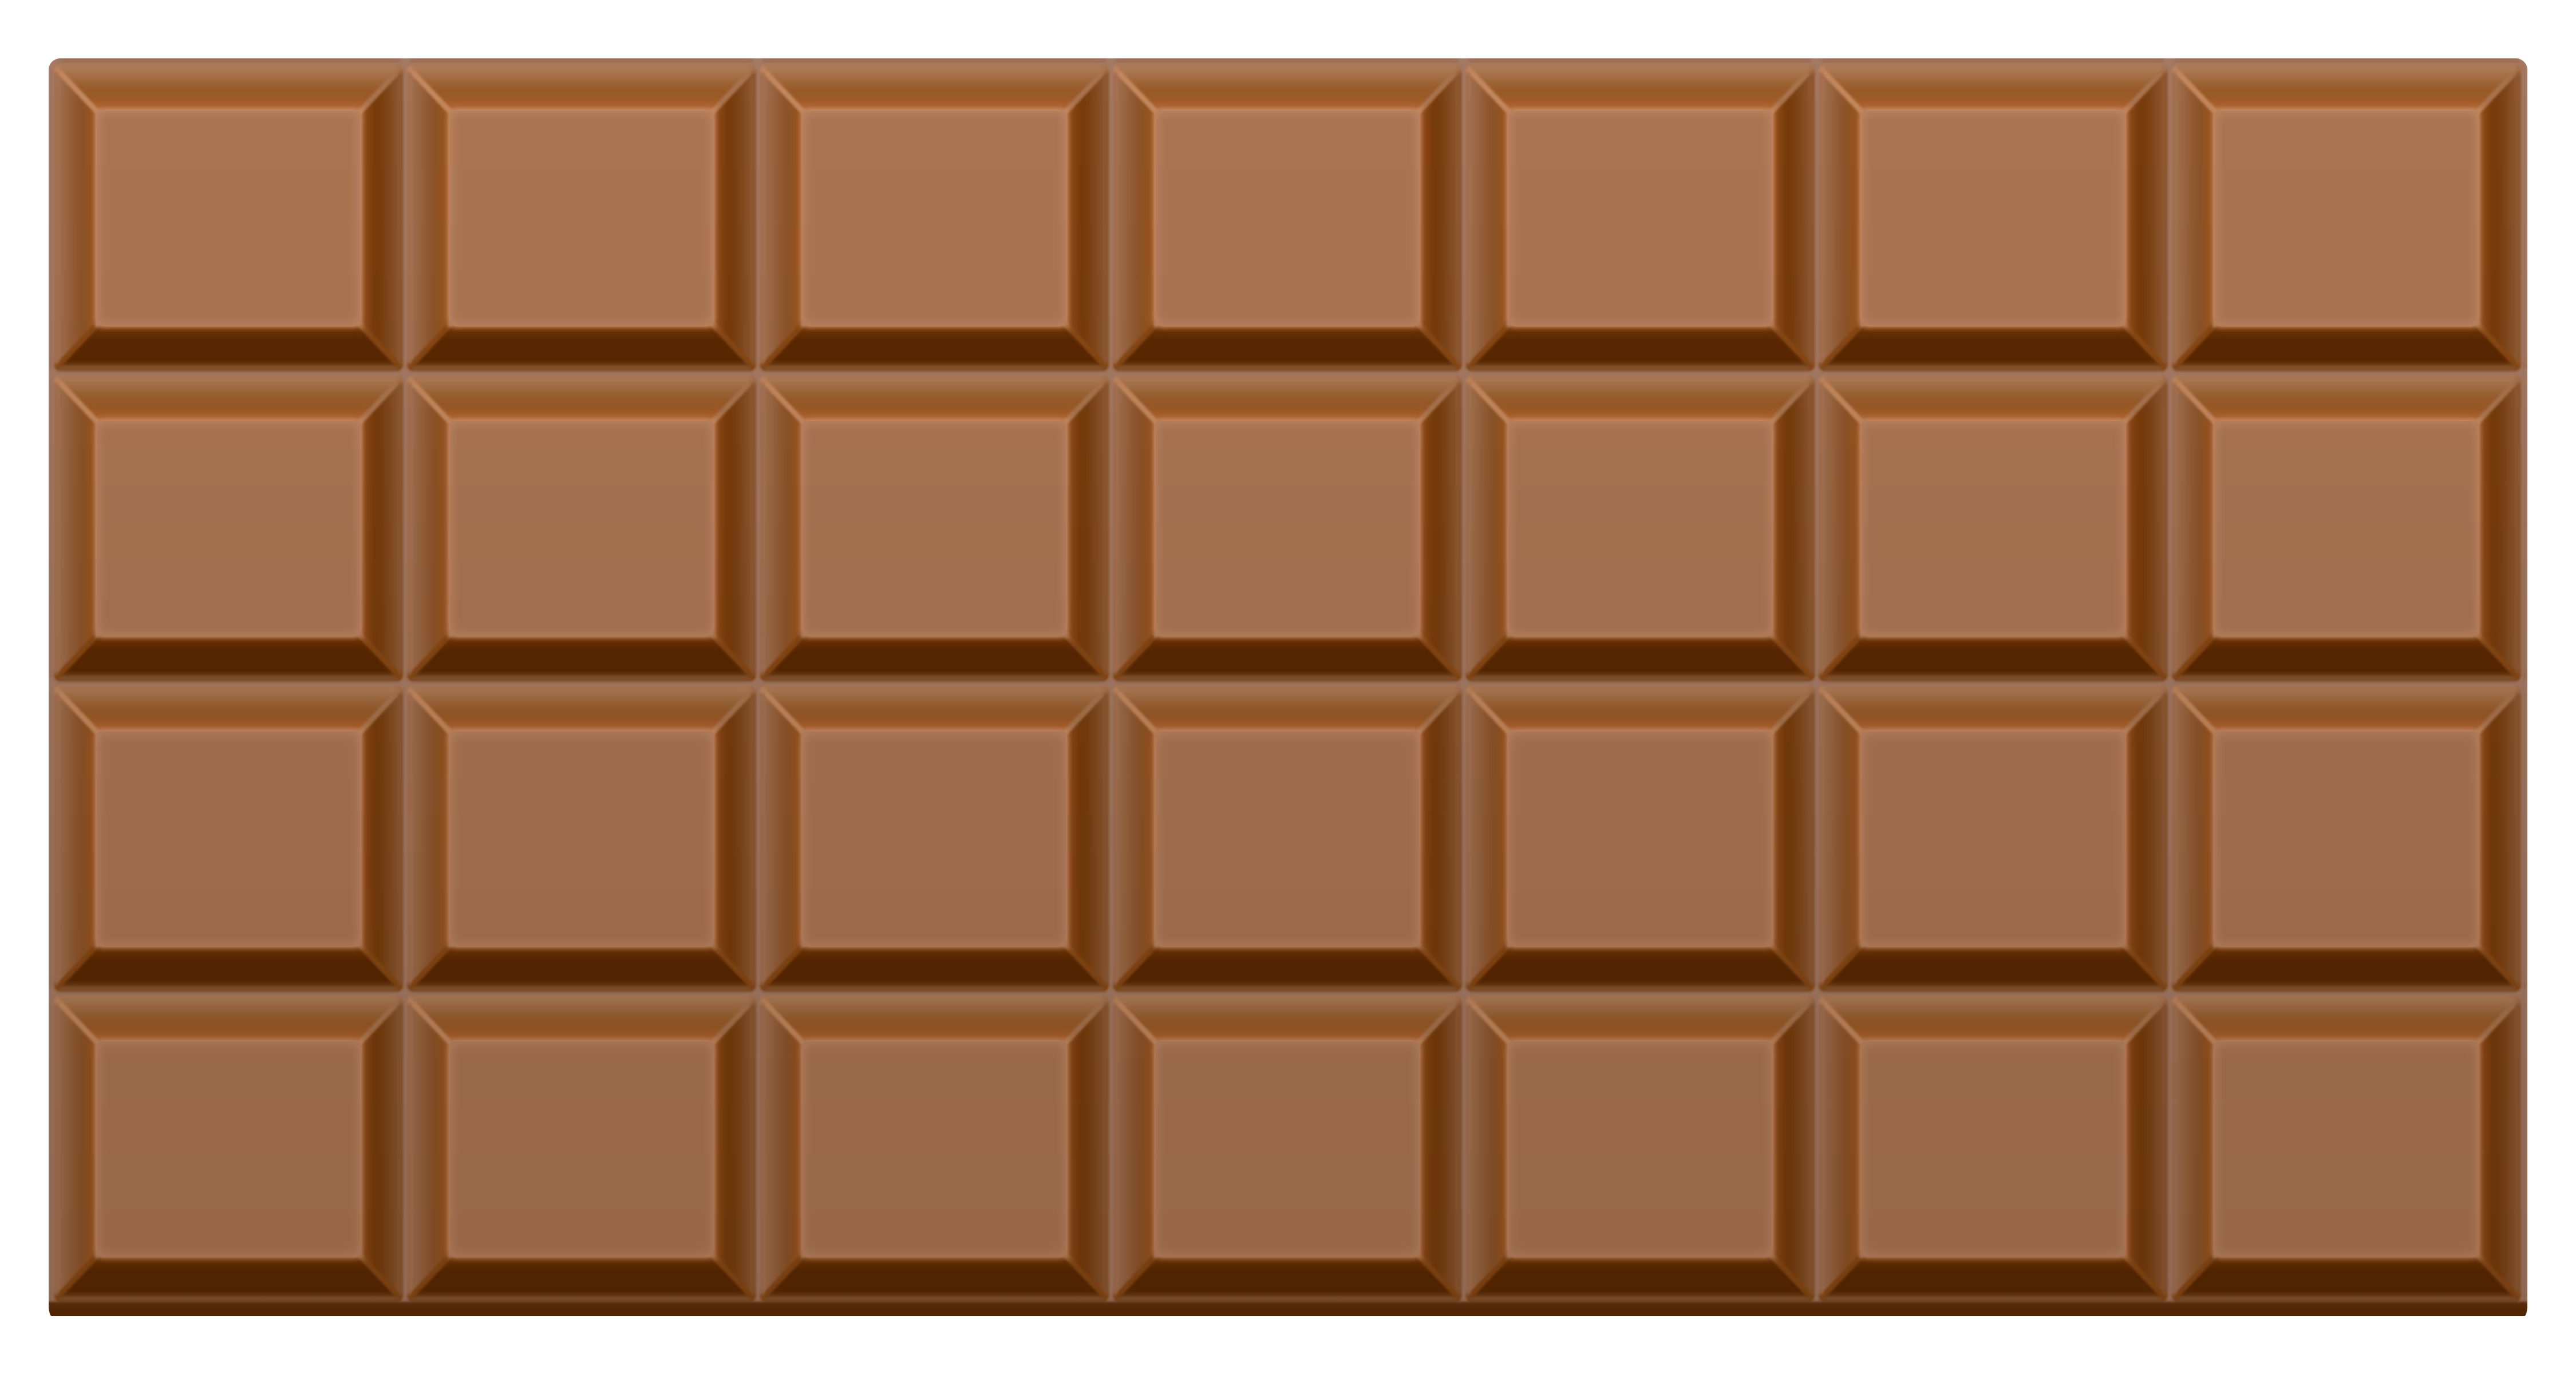 Chocolate Bar Clipart.